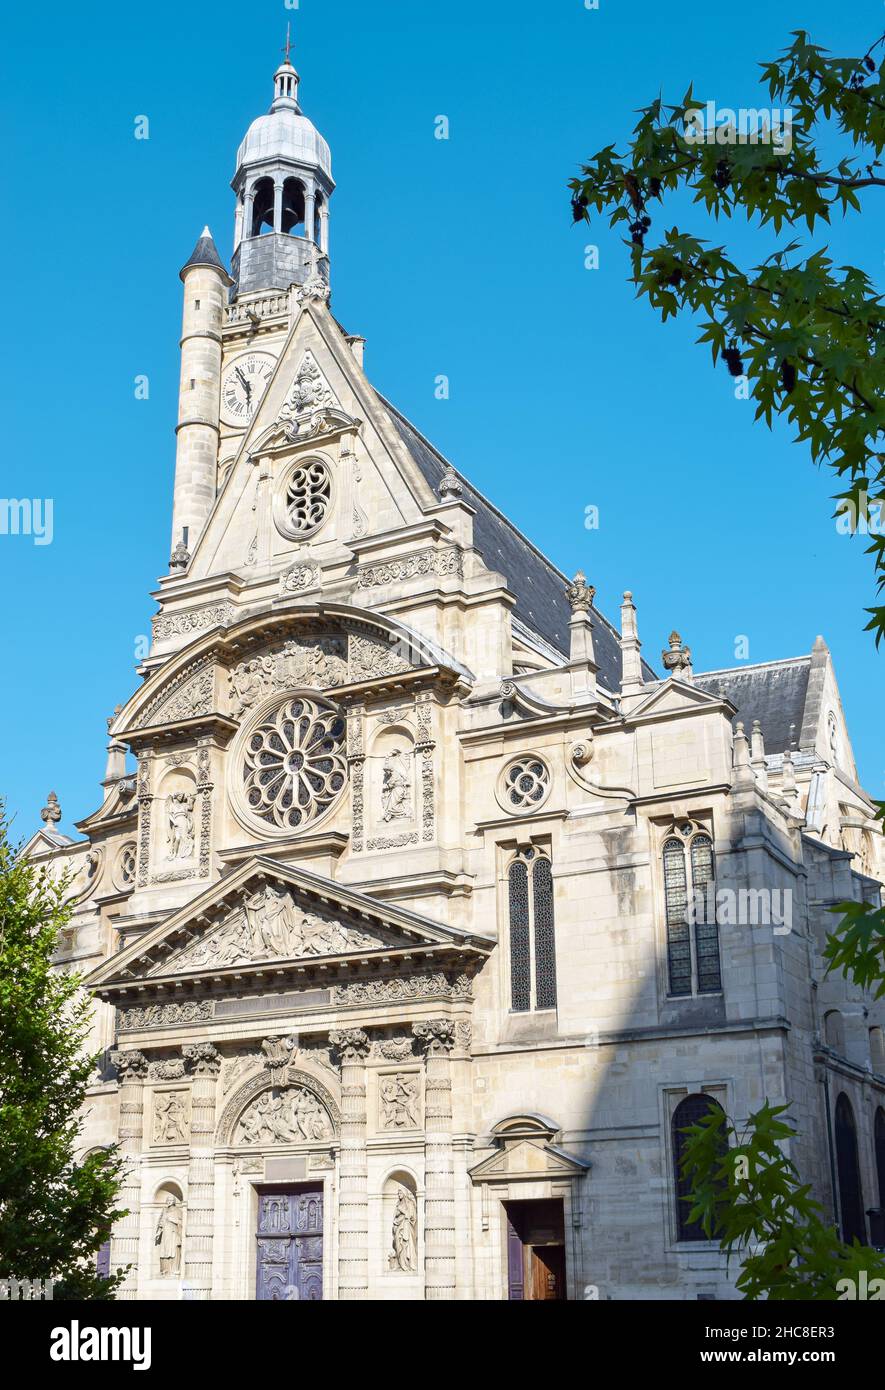 Fachada iglesia de Saint Etienne du Mont de estilo gótico flamígero siglo XV en Paris, Francia.JPG Stock Photo